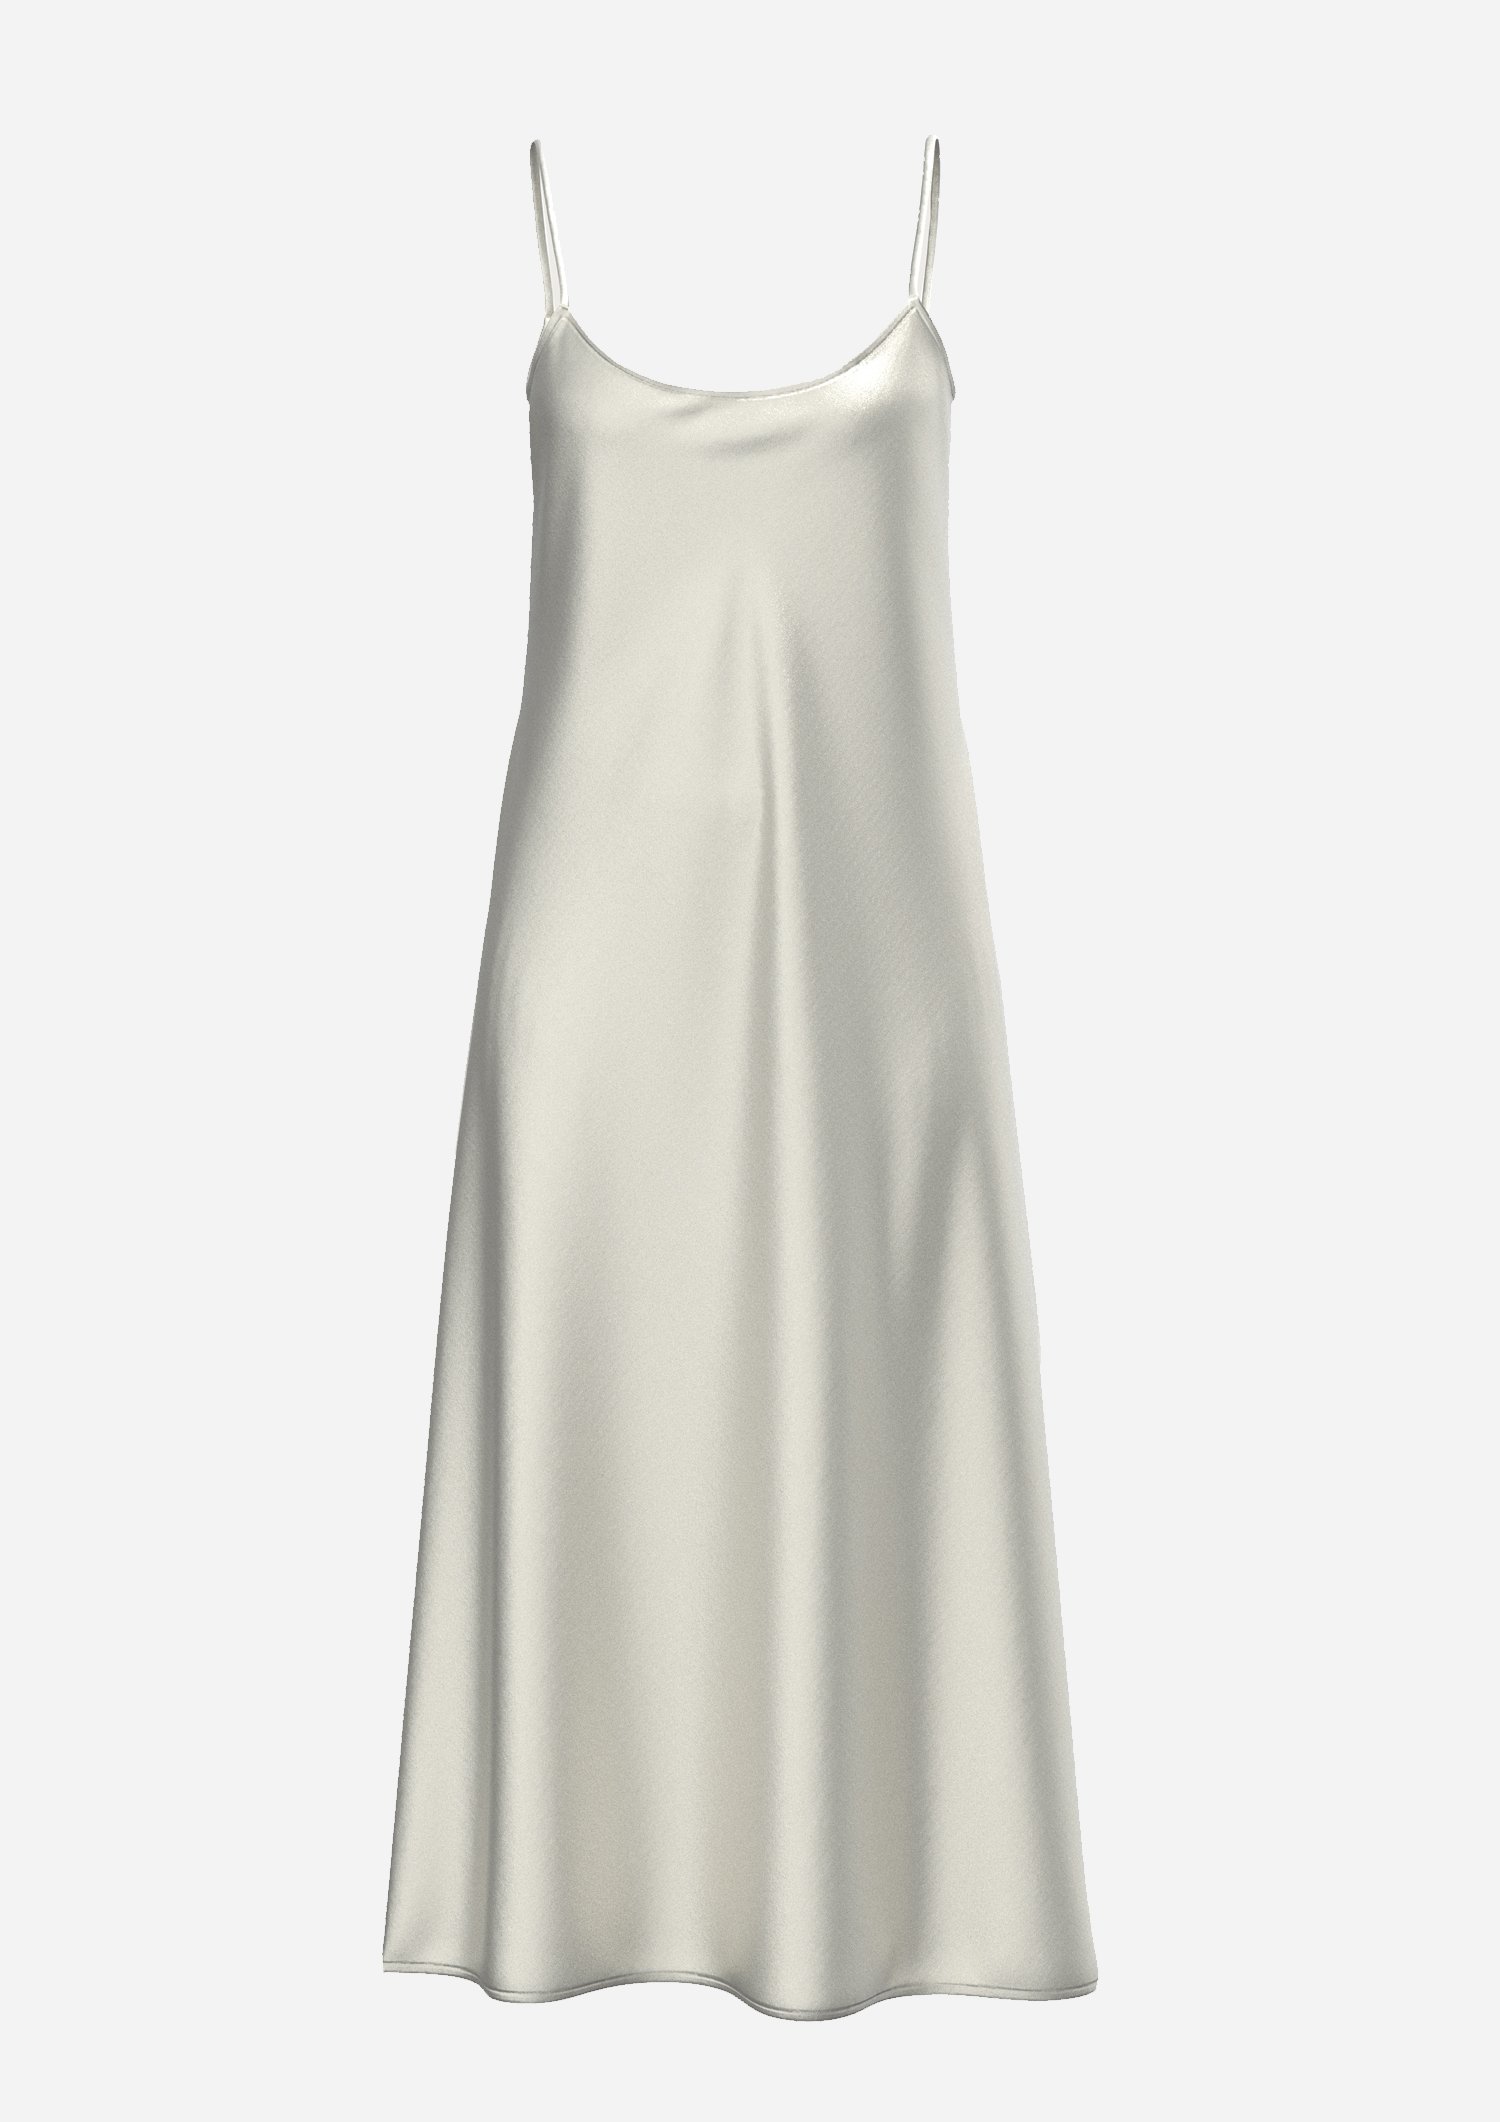 Slip dress in natural white